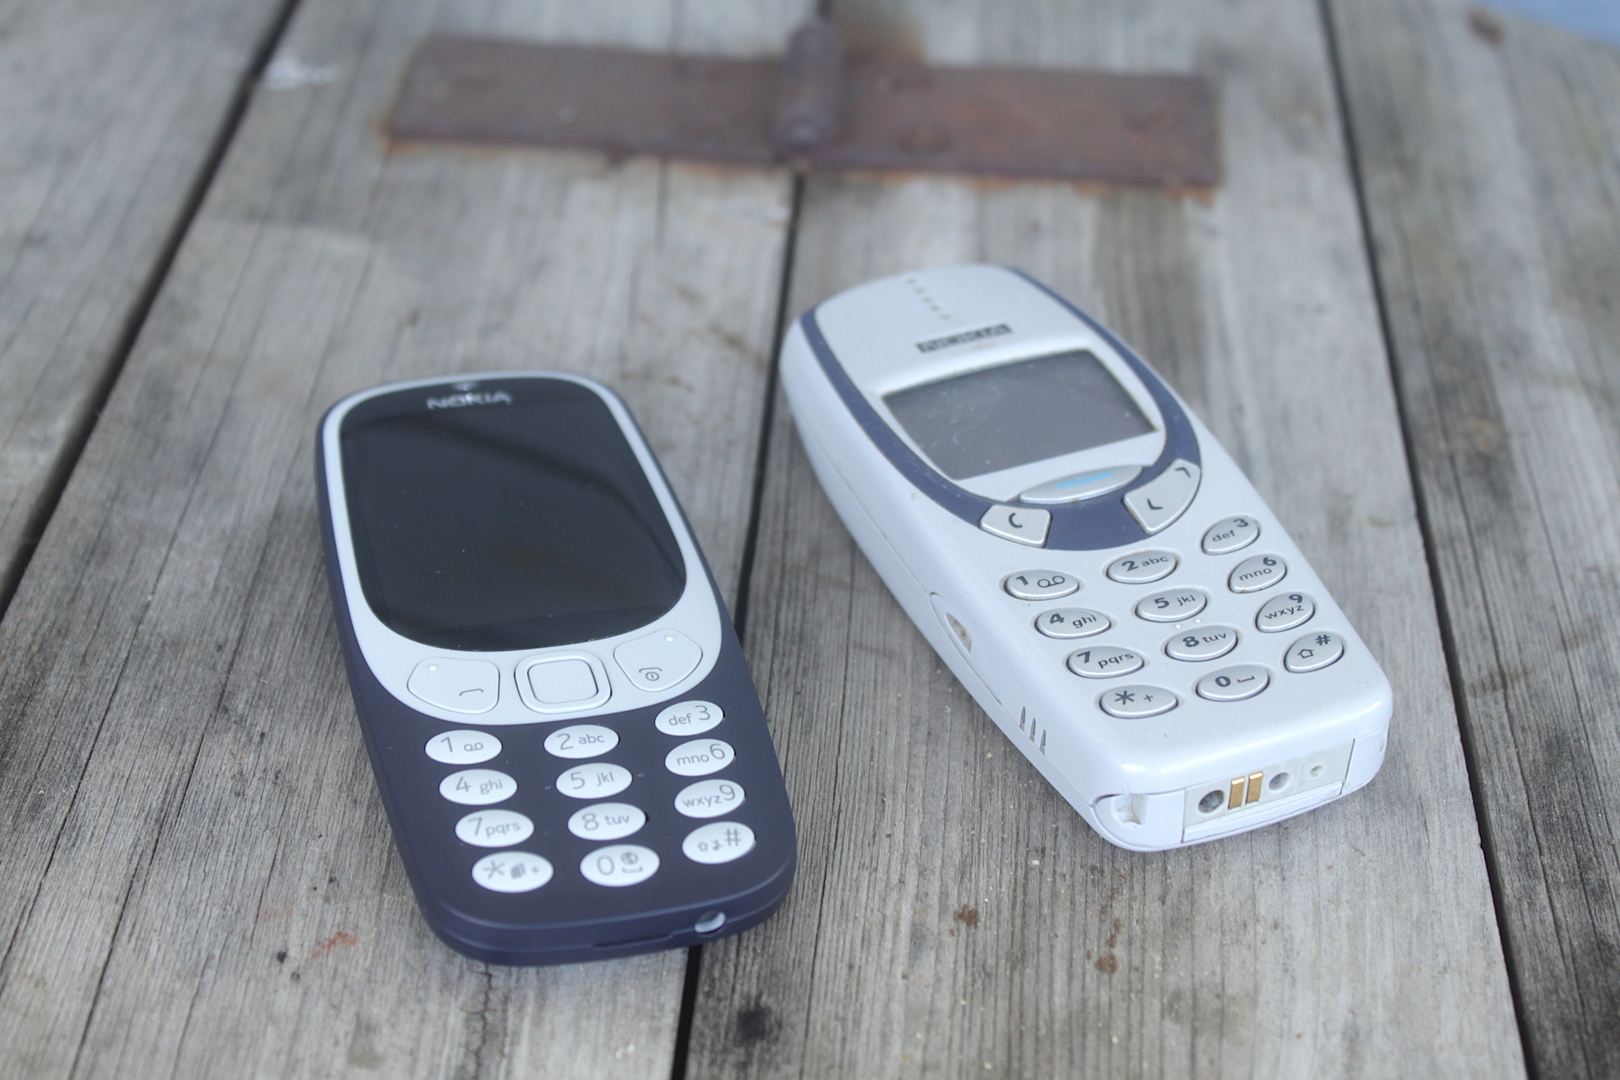 Nokia 3310 (2017) ja Nokia 3330